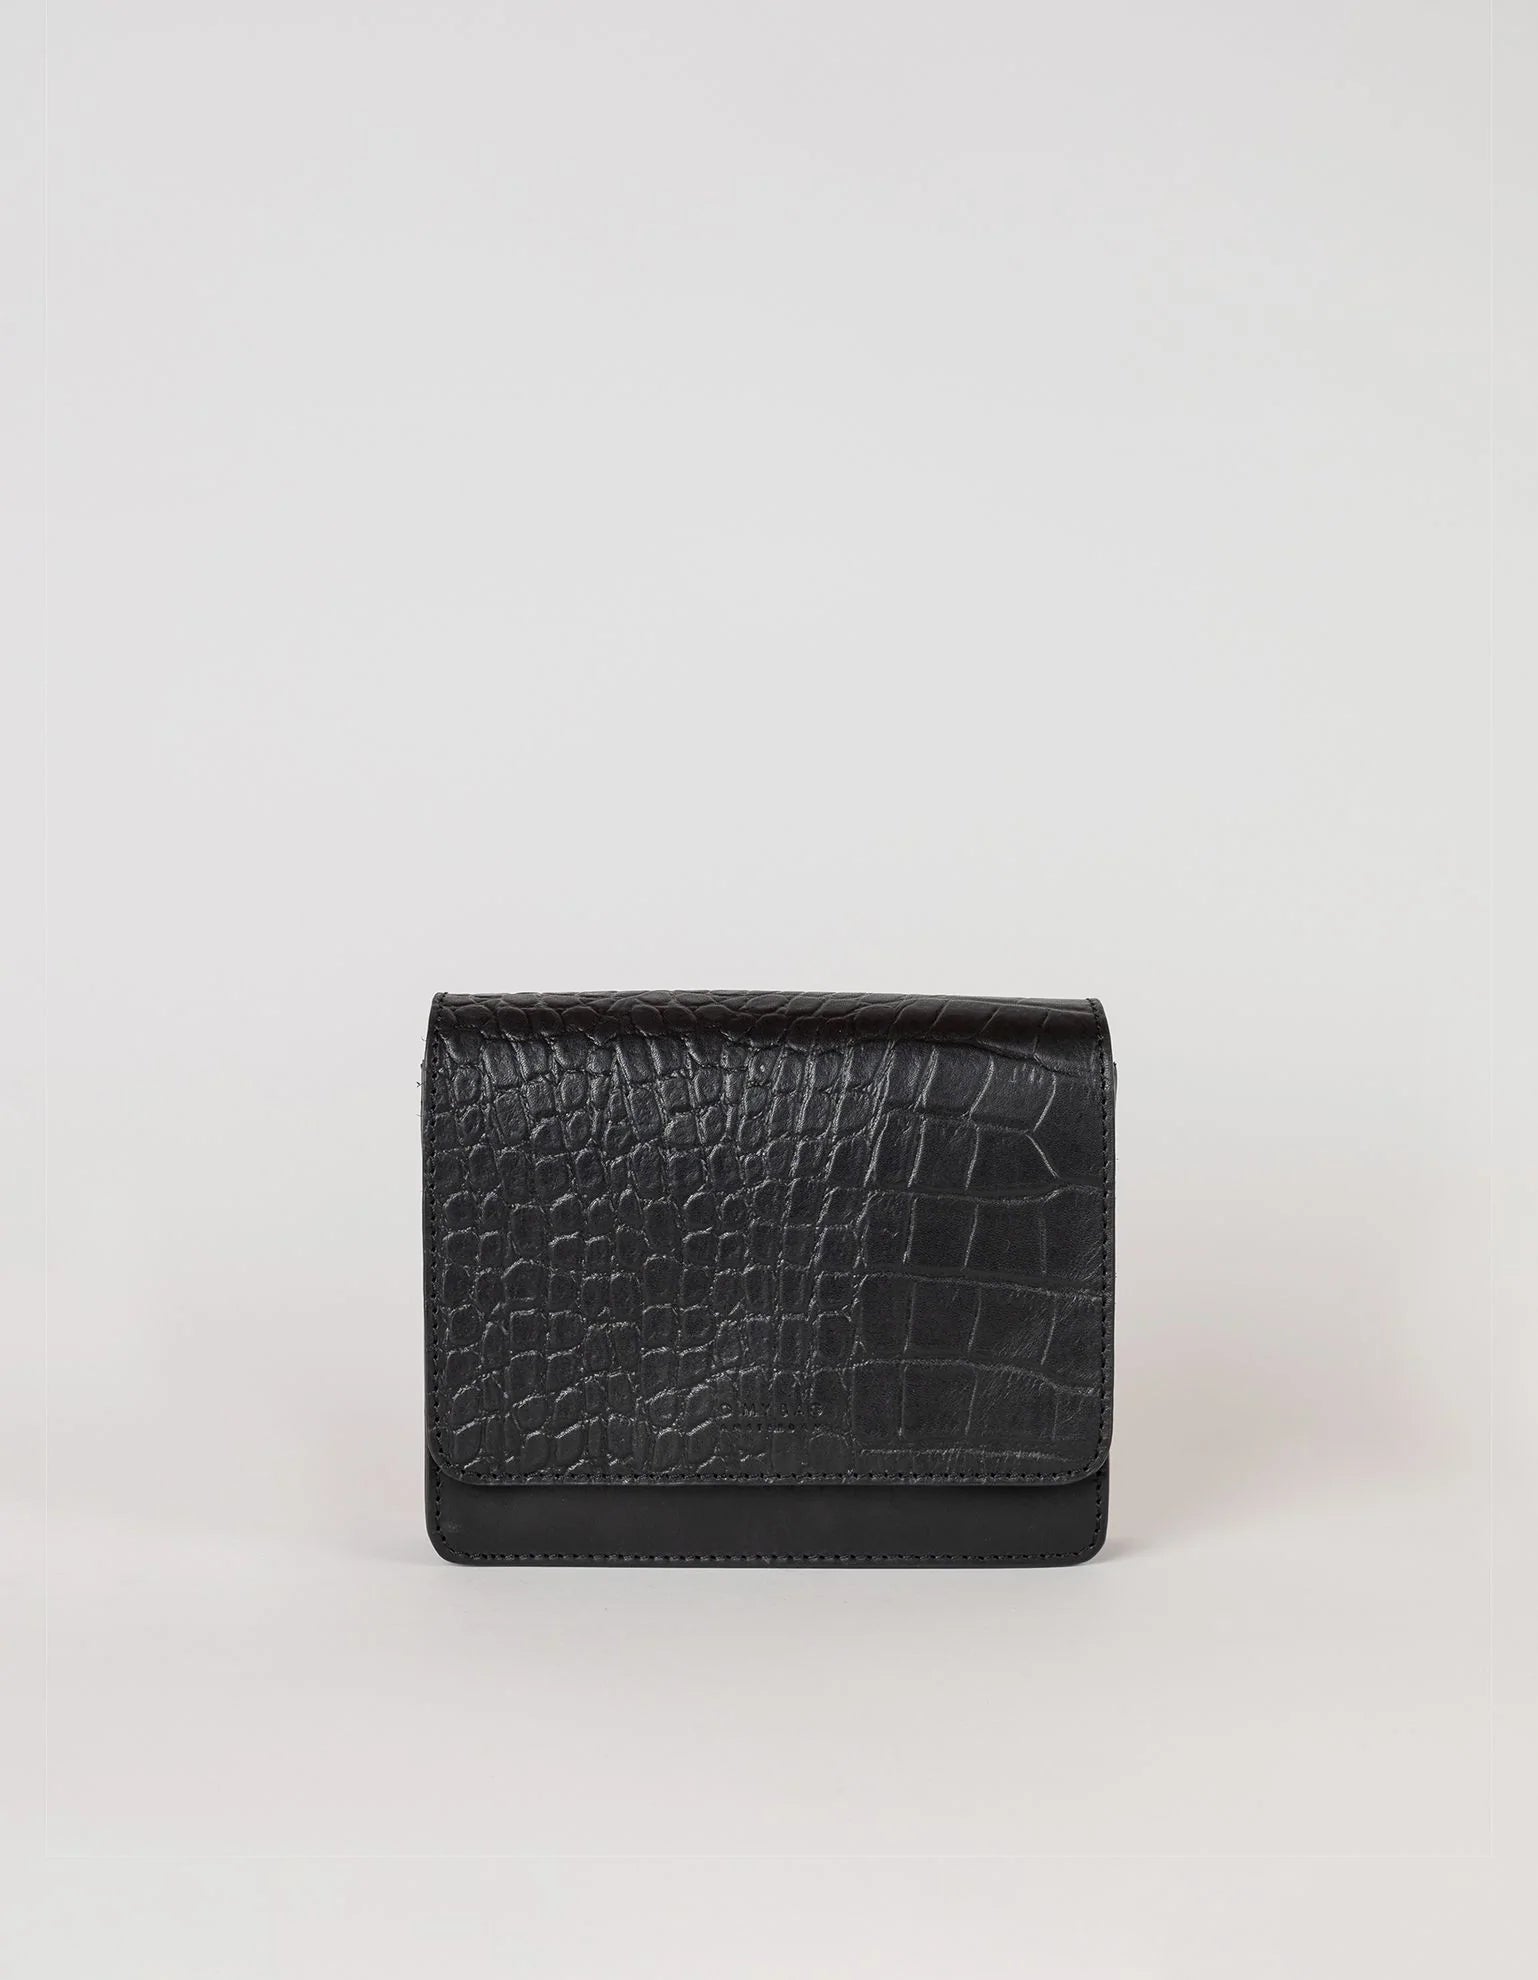 AUDREY mini⎜Black classic croco leather